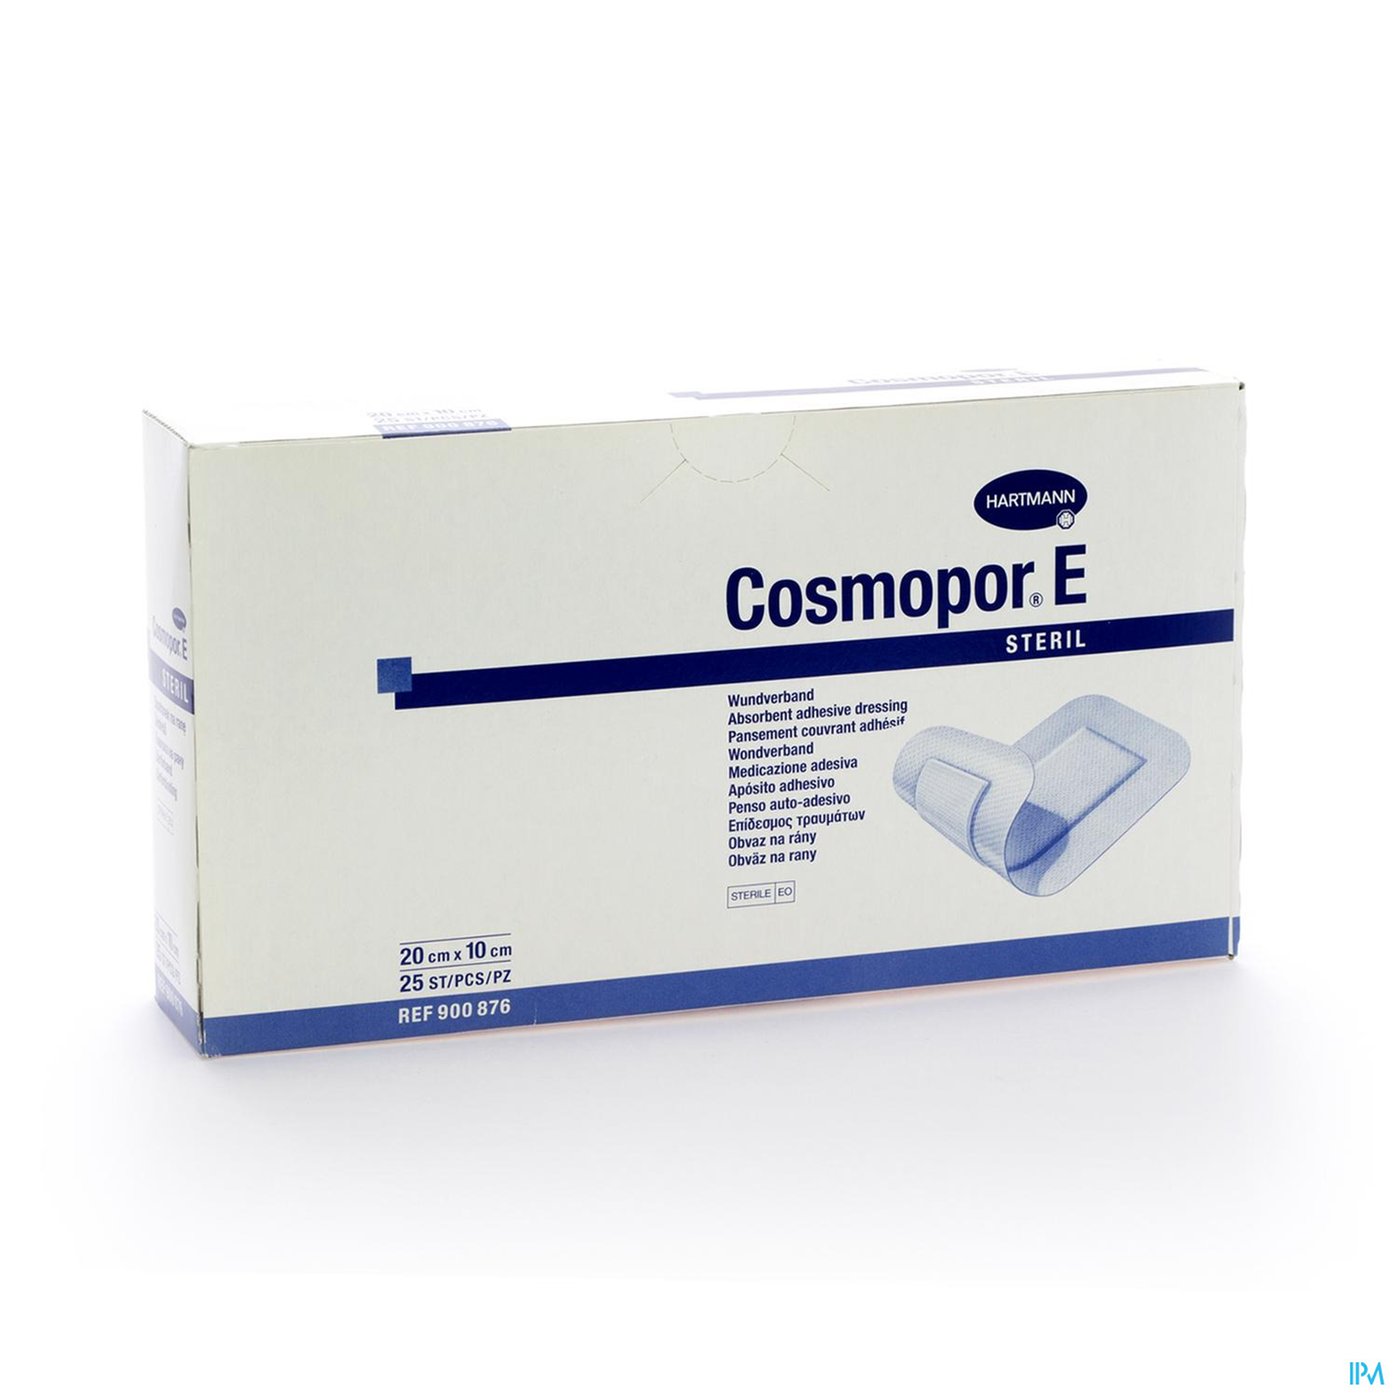 Cosmopor E Latexfree 20x10cm 25 P/s packshot